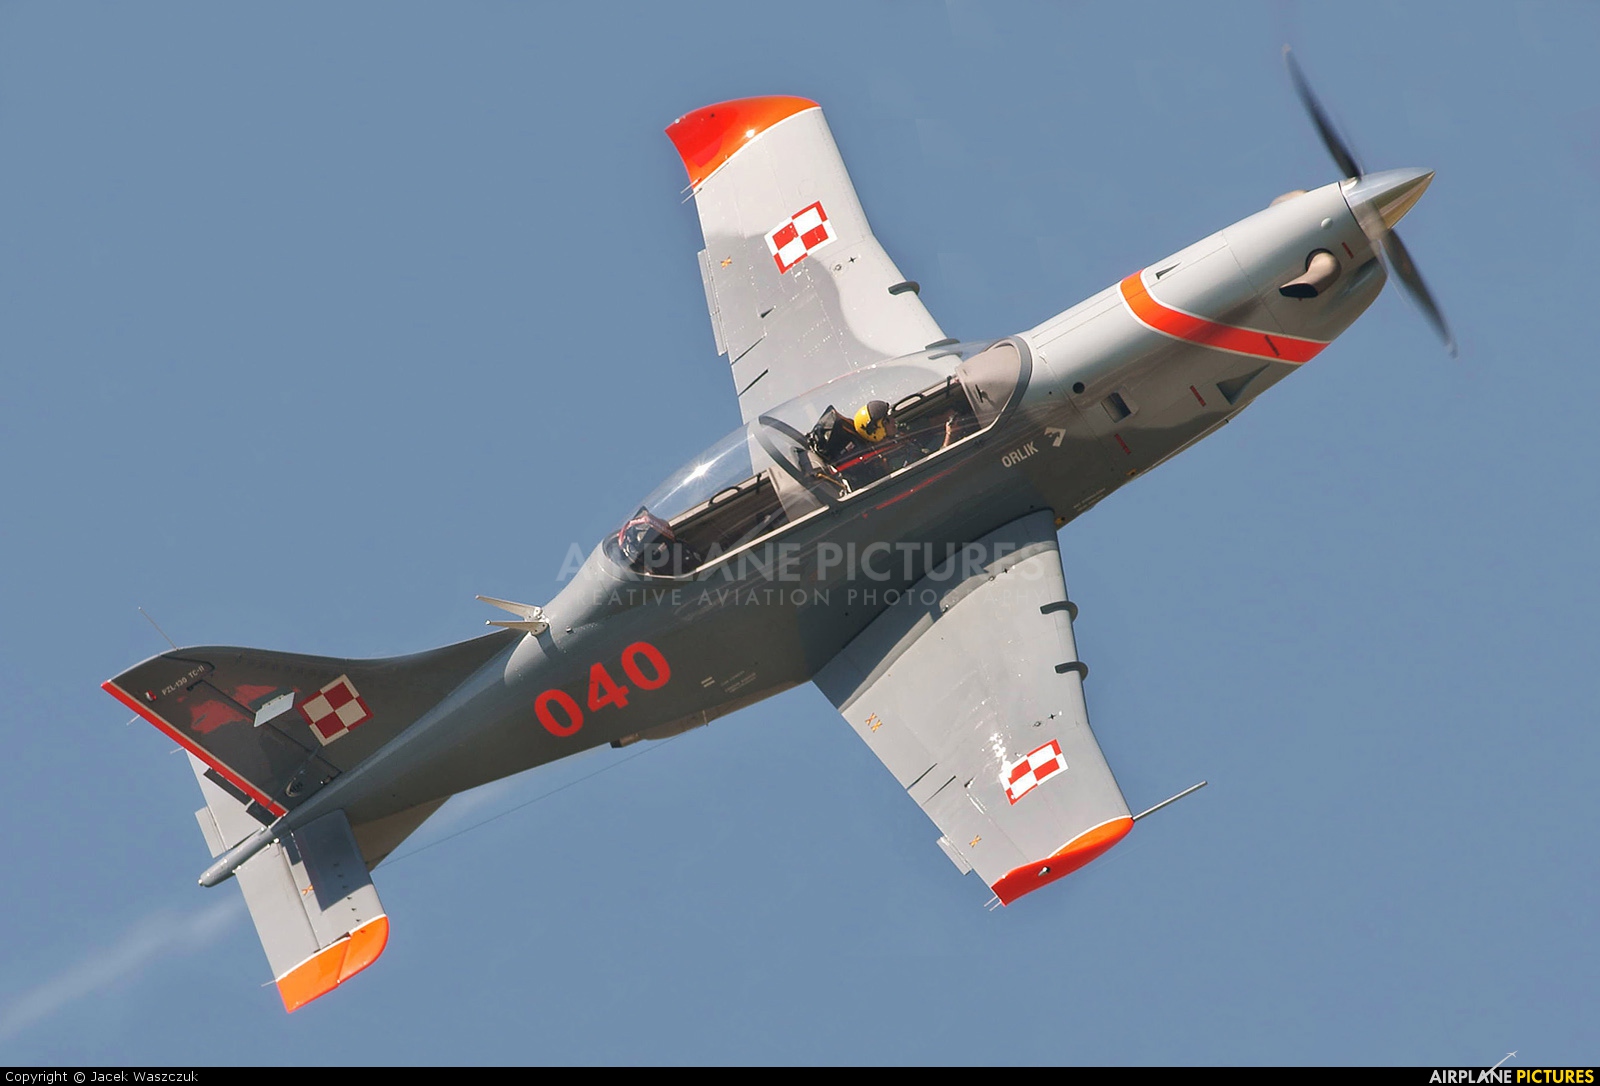 Poland - Air Force "Orlik Acrobatic Group" 040 aircraft at Radom - Sadków